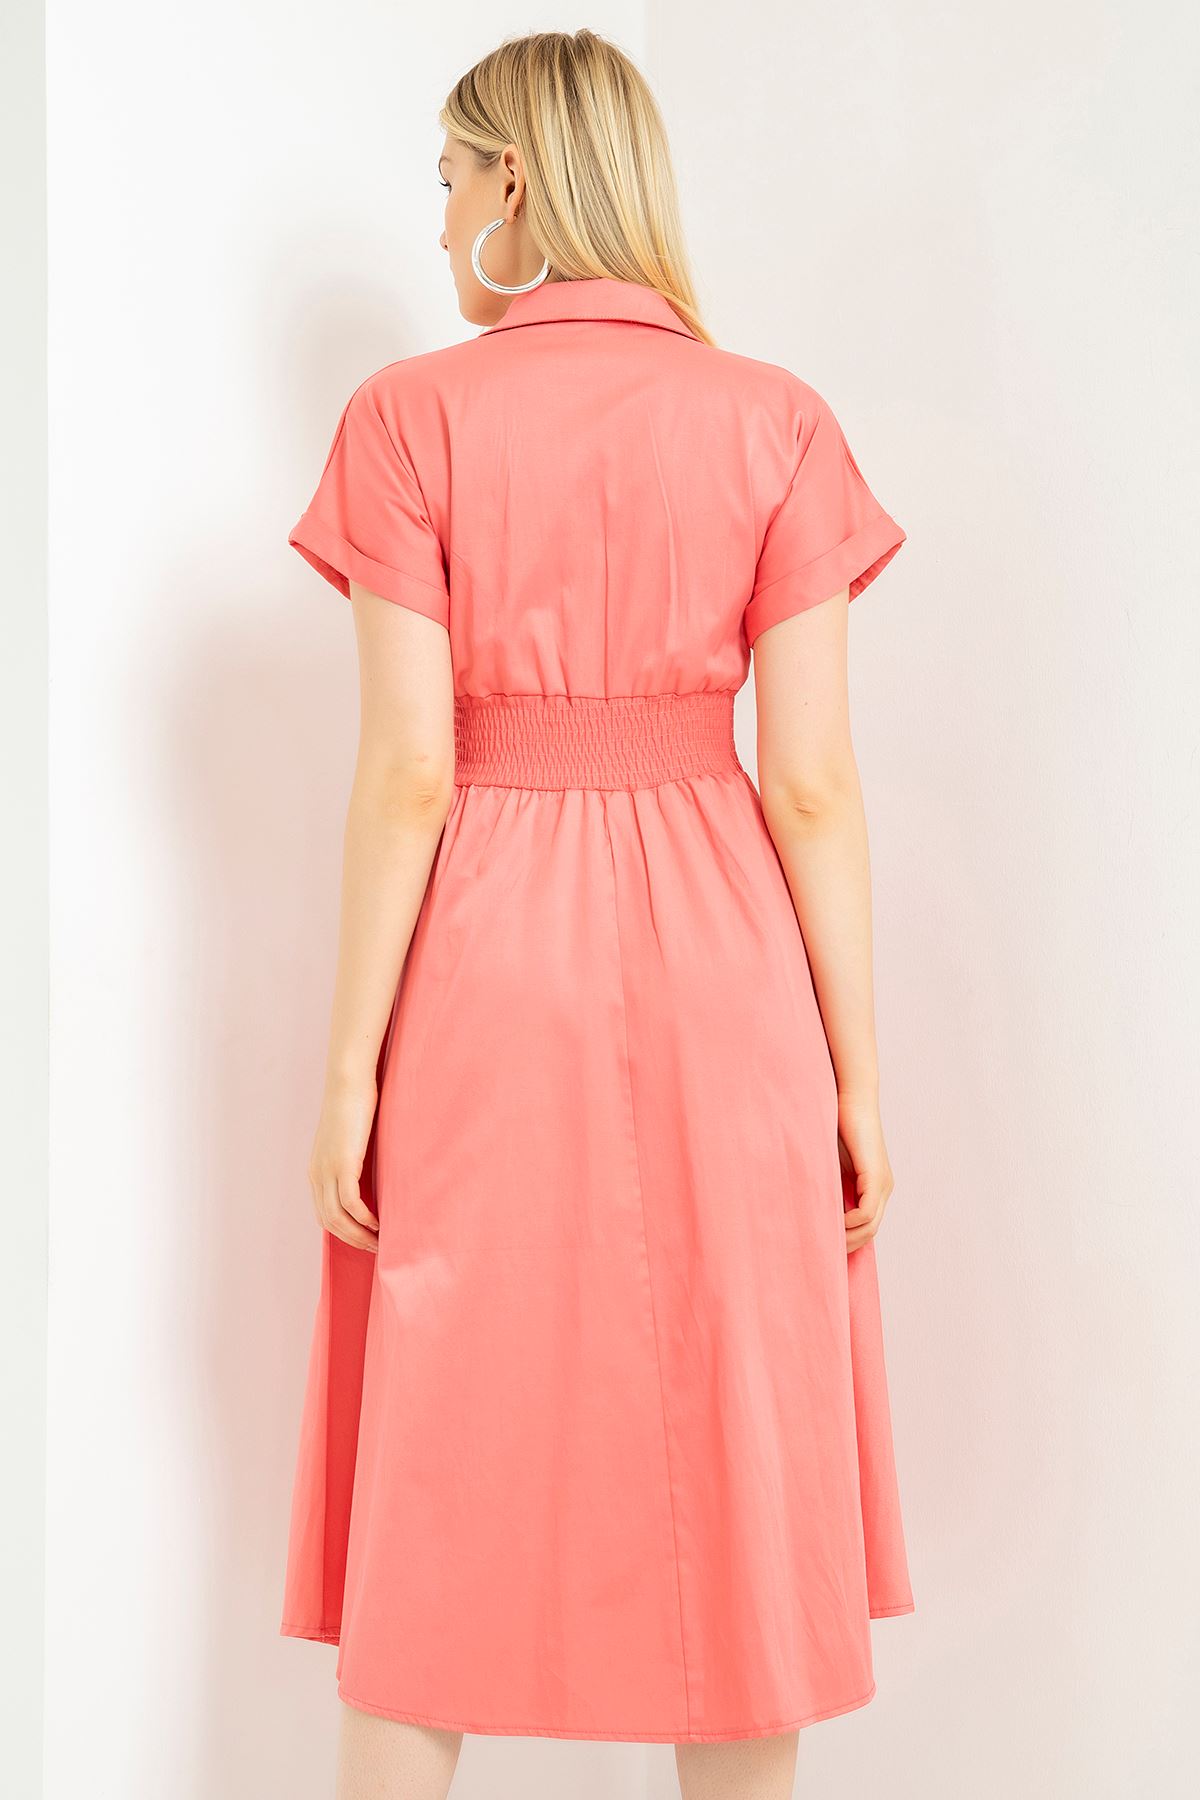 Erika Fabric Short Sleeve Zip Neck Midi Full Fit Women Dress - Pomegrante Flower